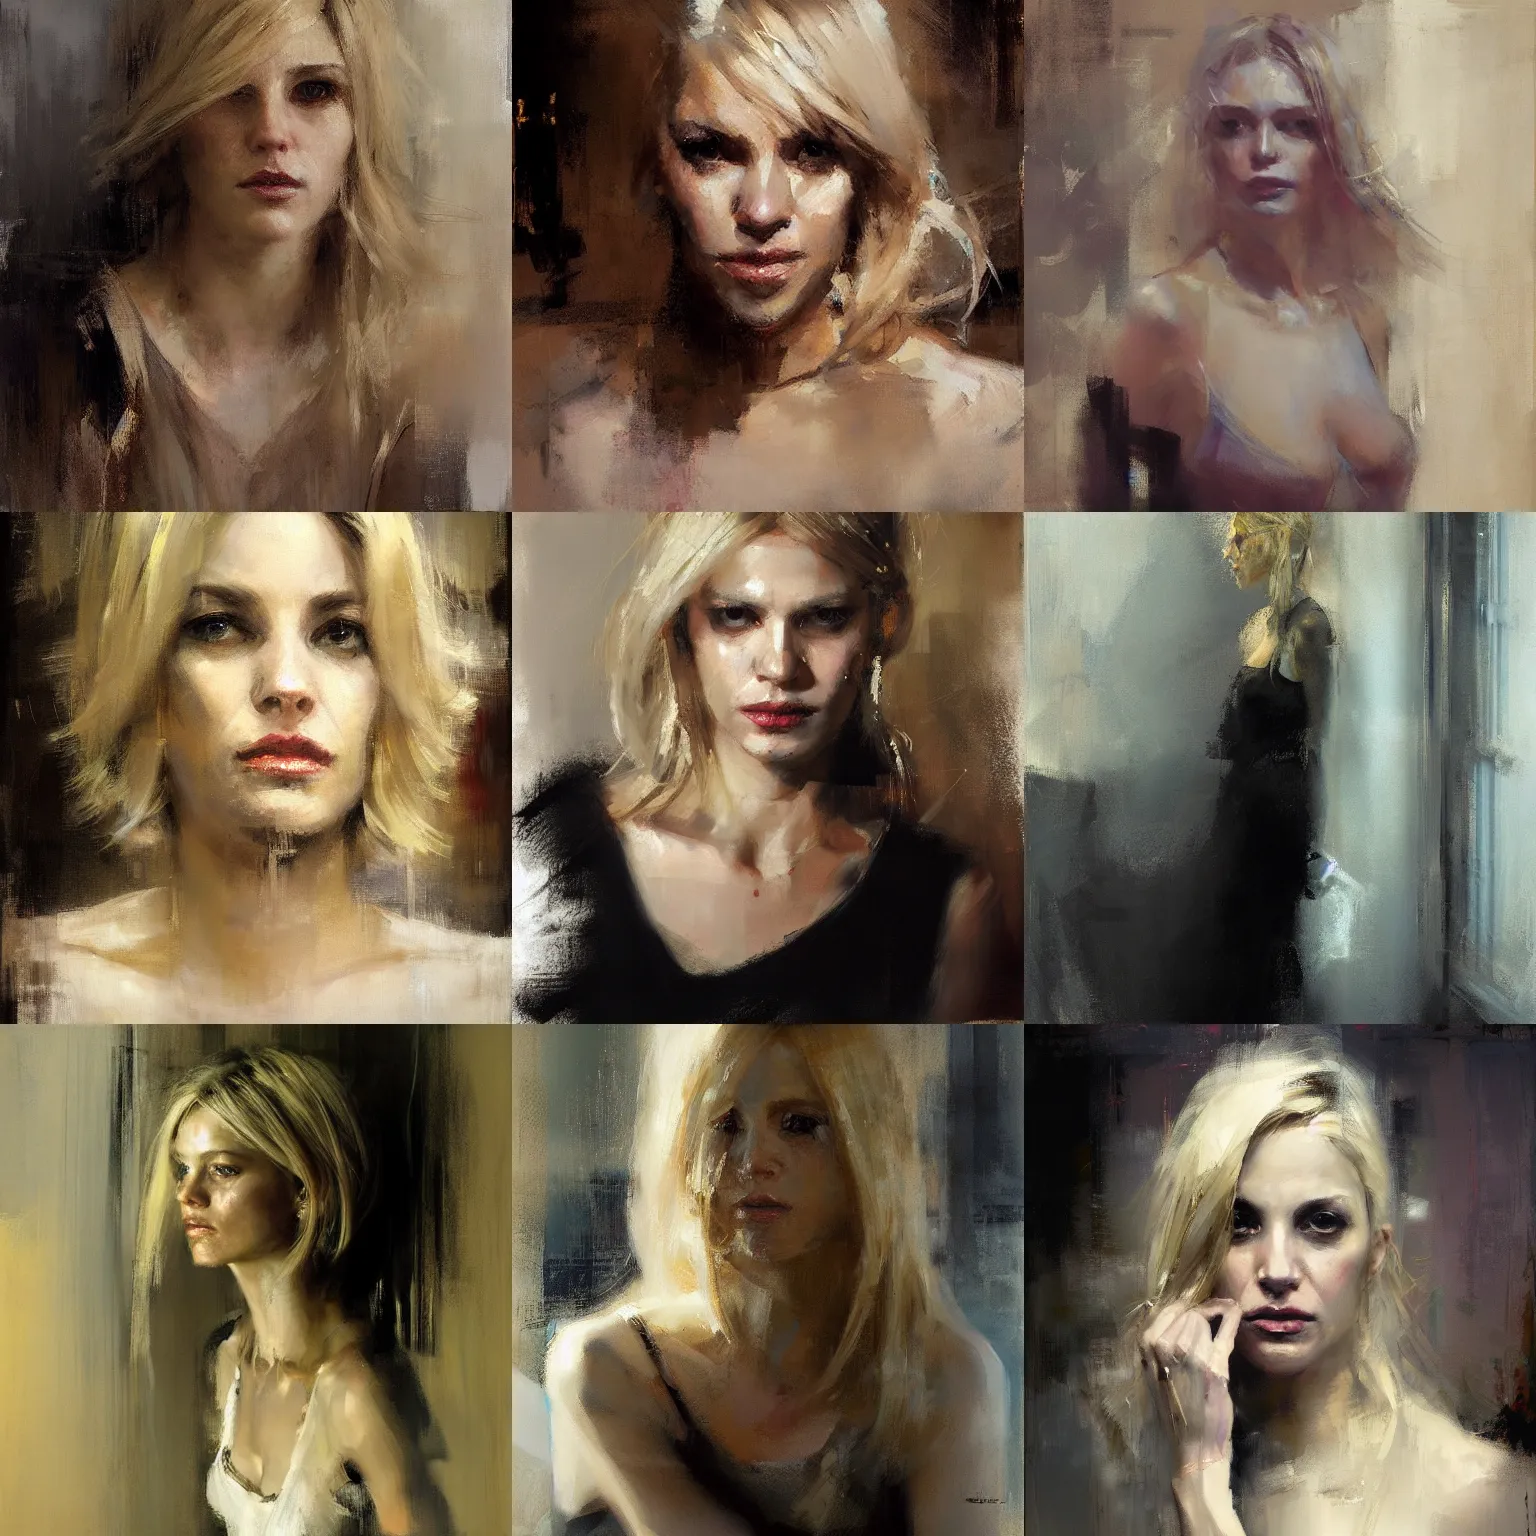 Prompt: Portrait of a blonde woman, by Jeremy Mann